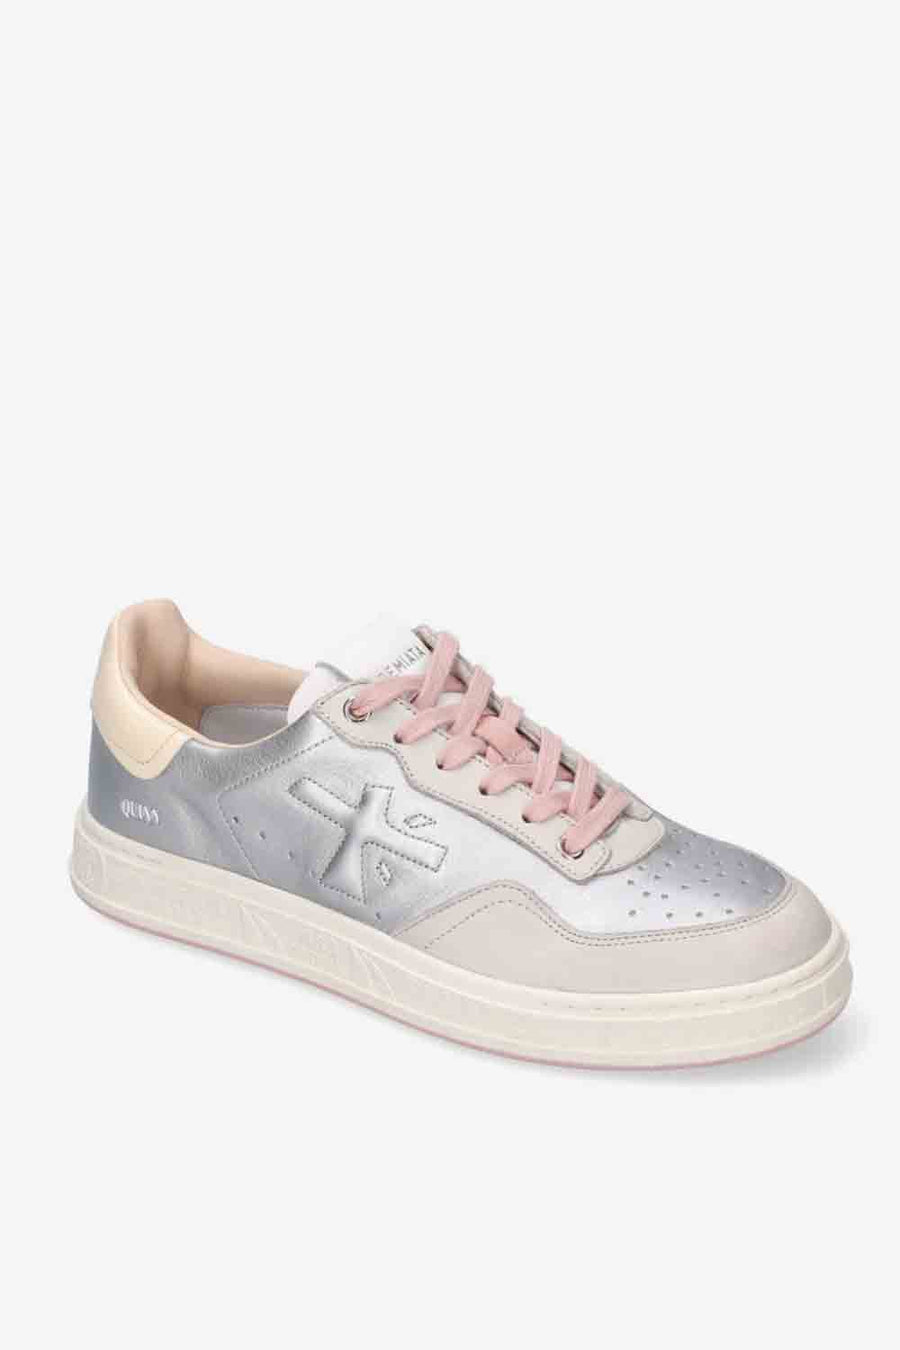 Sneakers Premiata color argento quinnd 6321